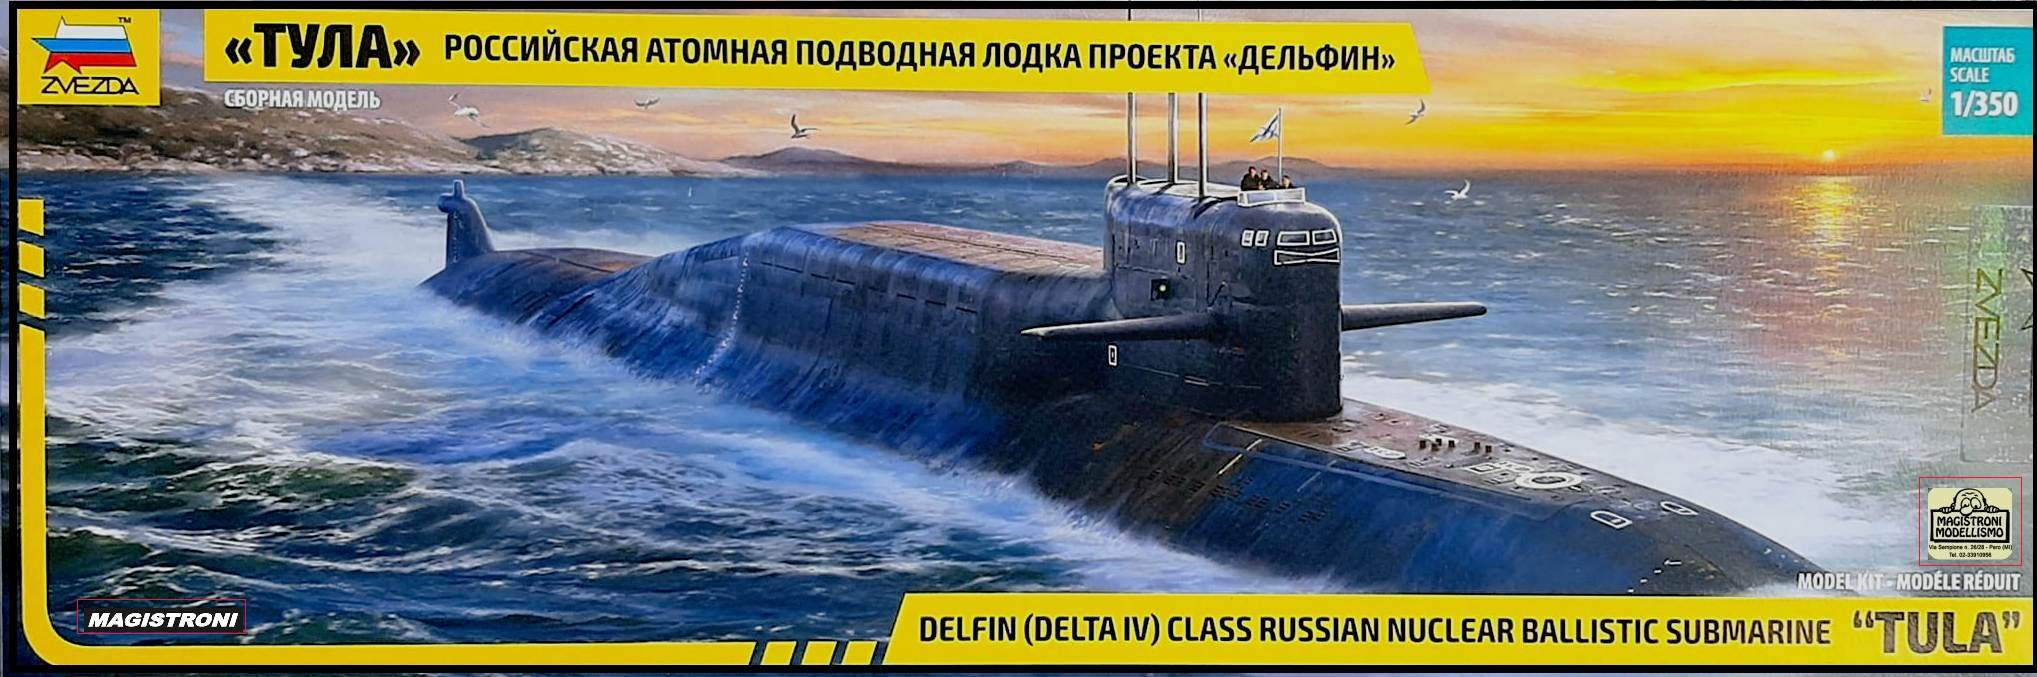 RUSSIAN NUCLEAR BALLISTIC SUBMARINE "TULA"